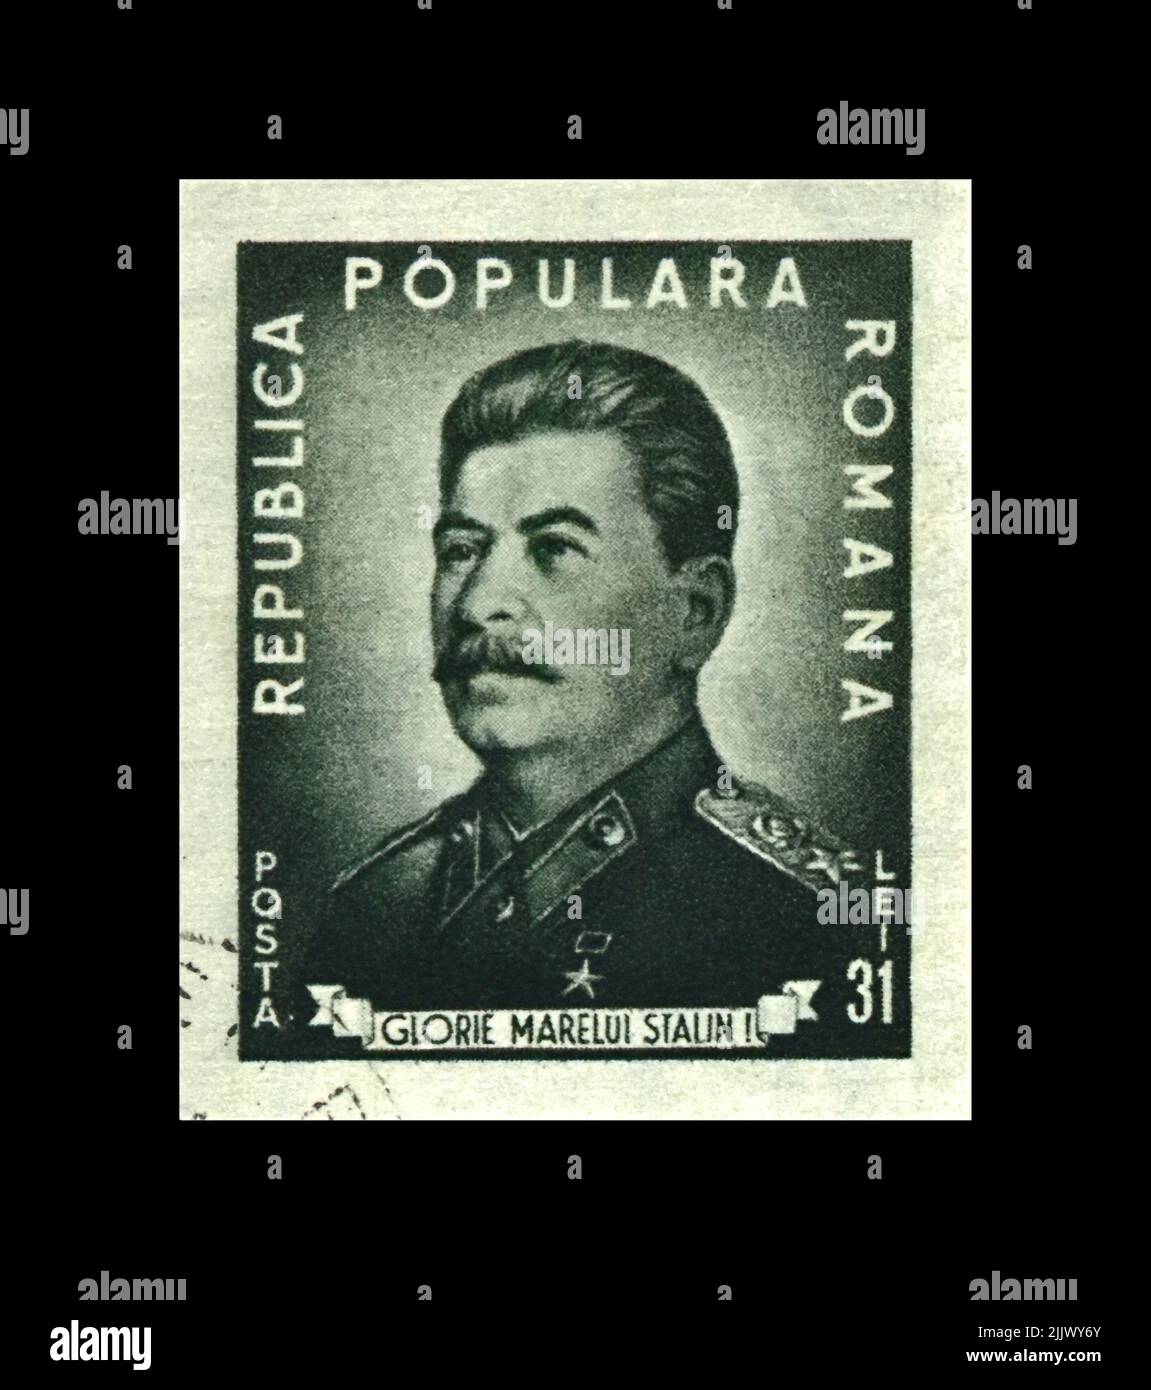 Joseph Stalin, famous soviet politician leader, 70th birth anniversary, circa 1949. The Soviet Army memorial. Vintage postal stamp of Romania isolated Stock Photo